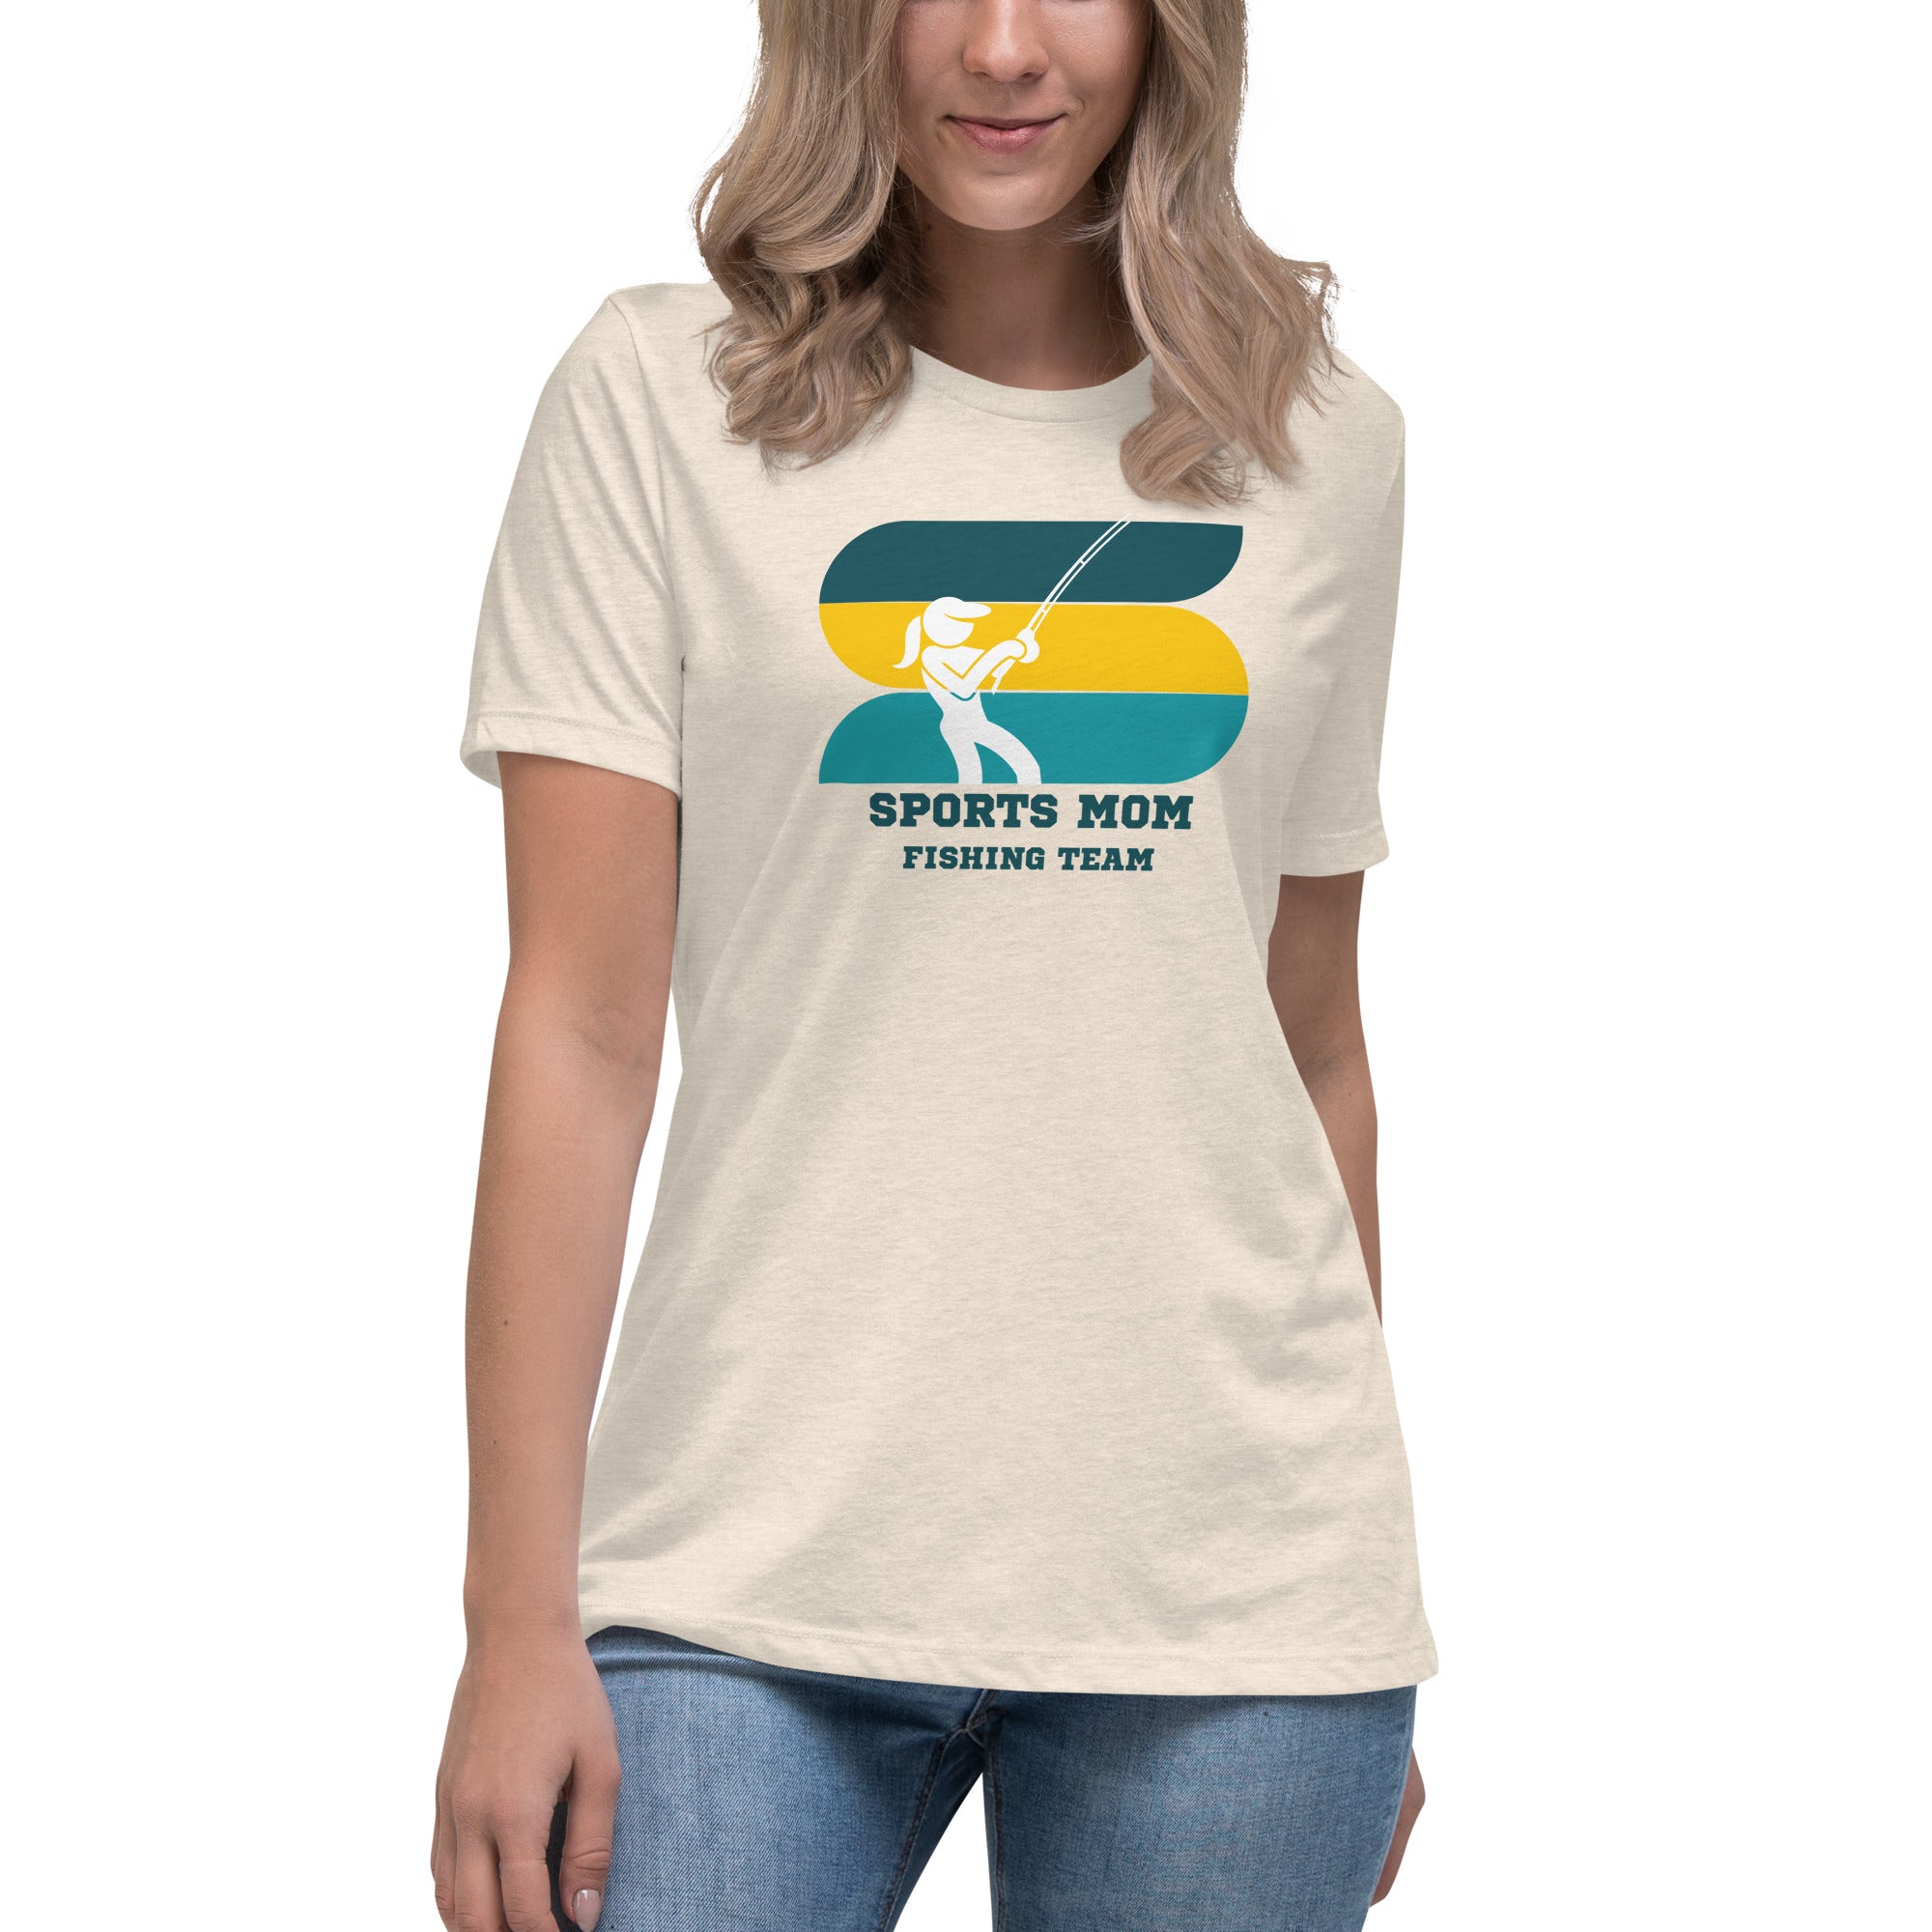 The Original Sports Mom Fishing Team Women's Premium T-Shirt